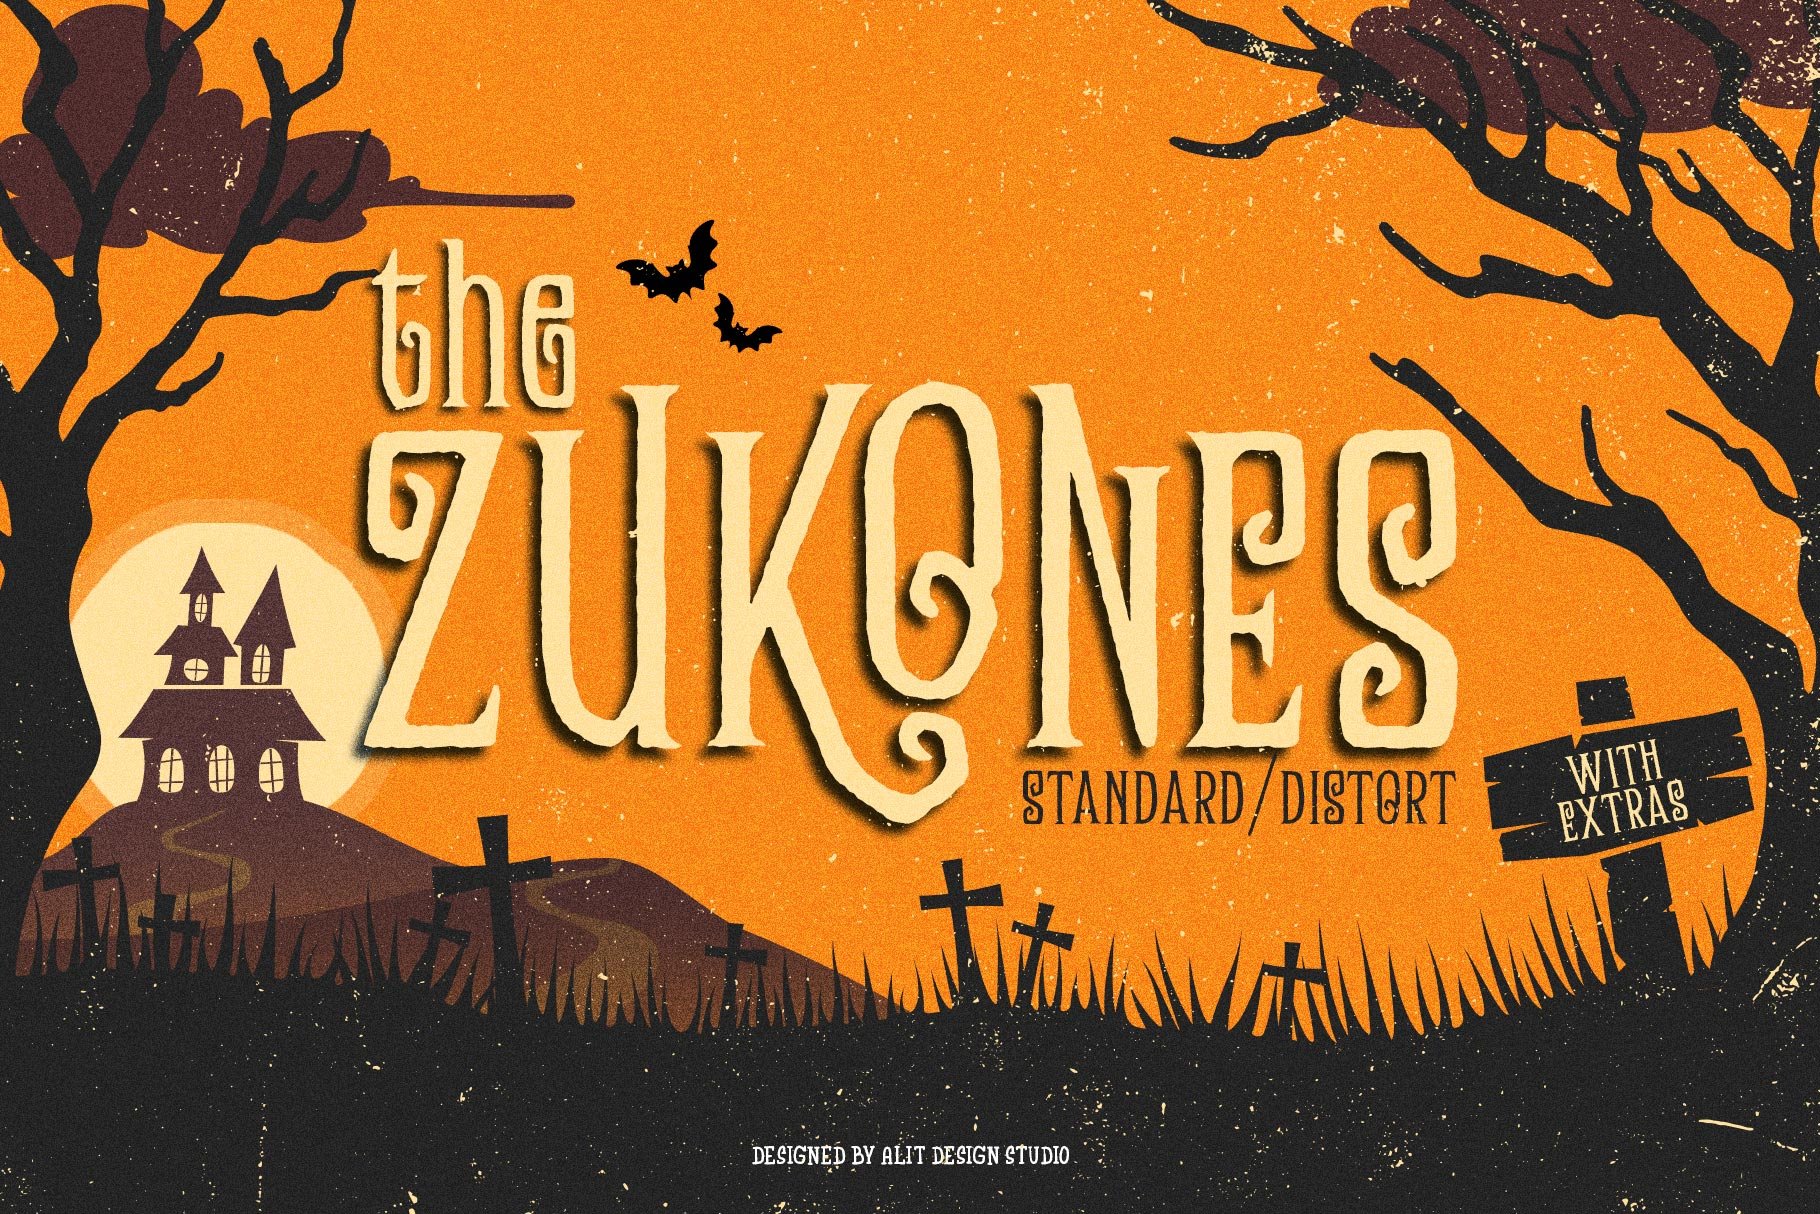 The Zukones Halloween Font cover image.